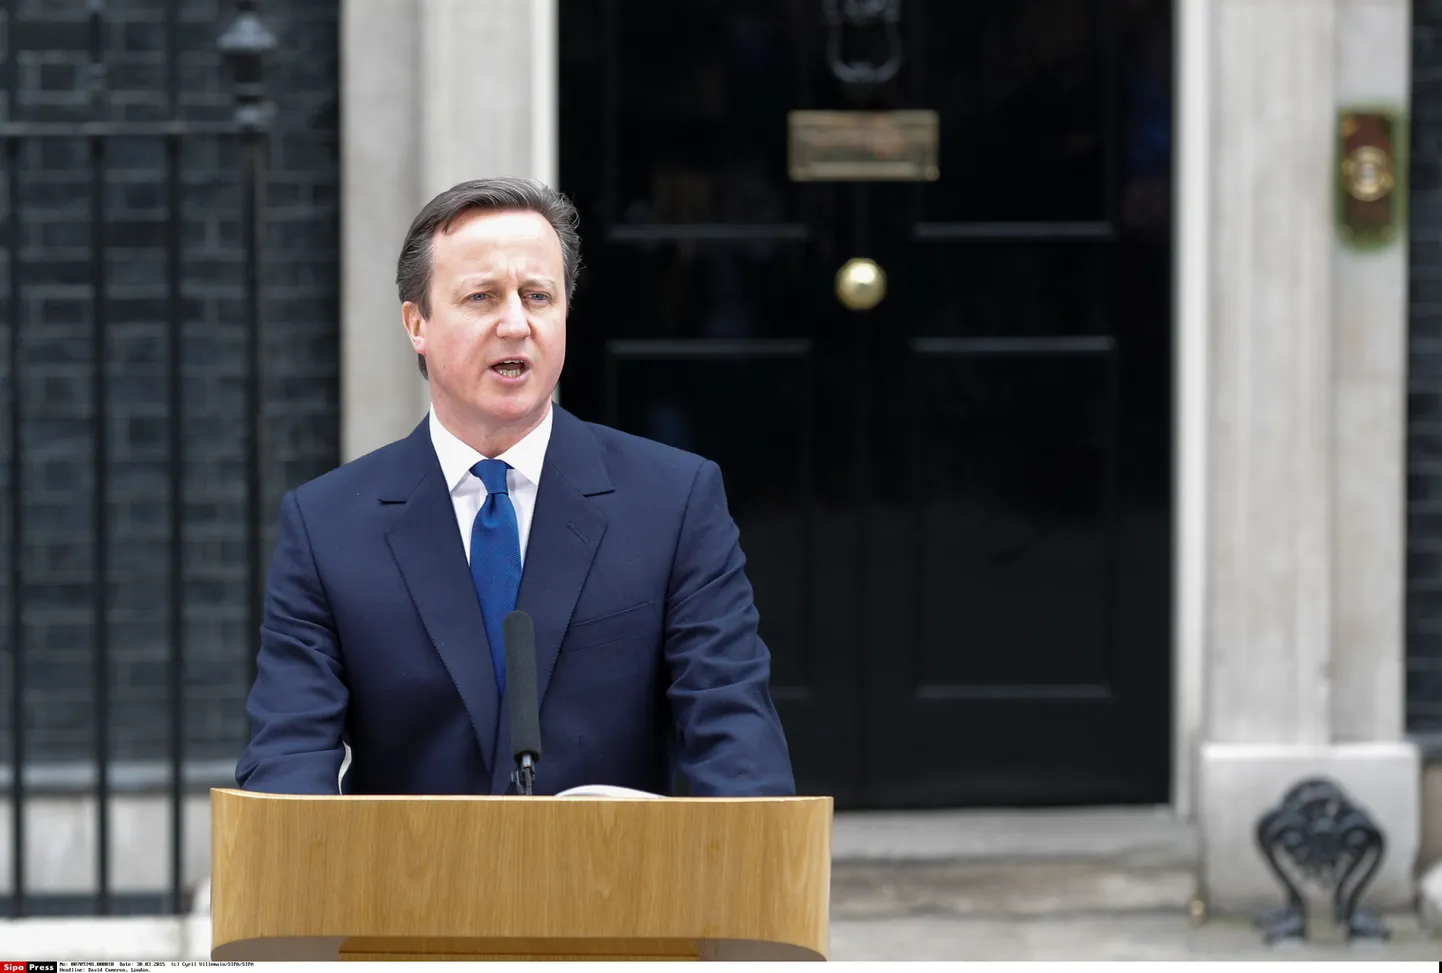 Briti peaminister David Cameron täna Londonis Downing 10 kõnet pidamas.